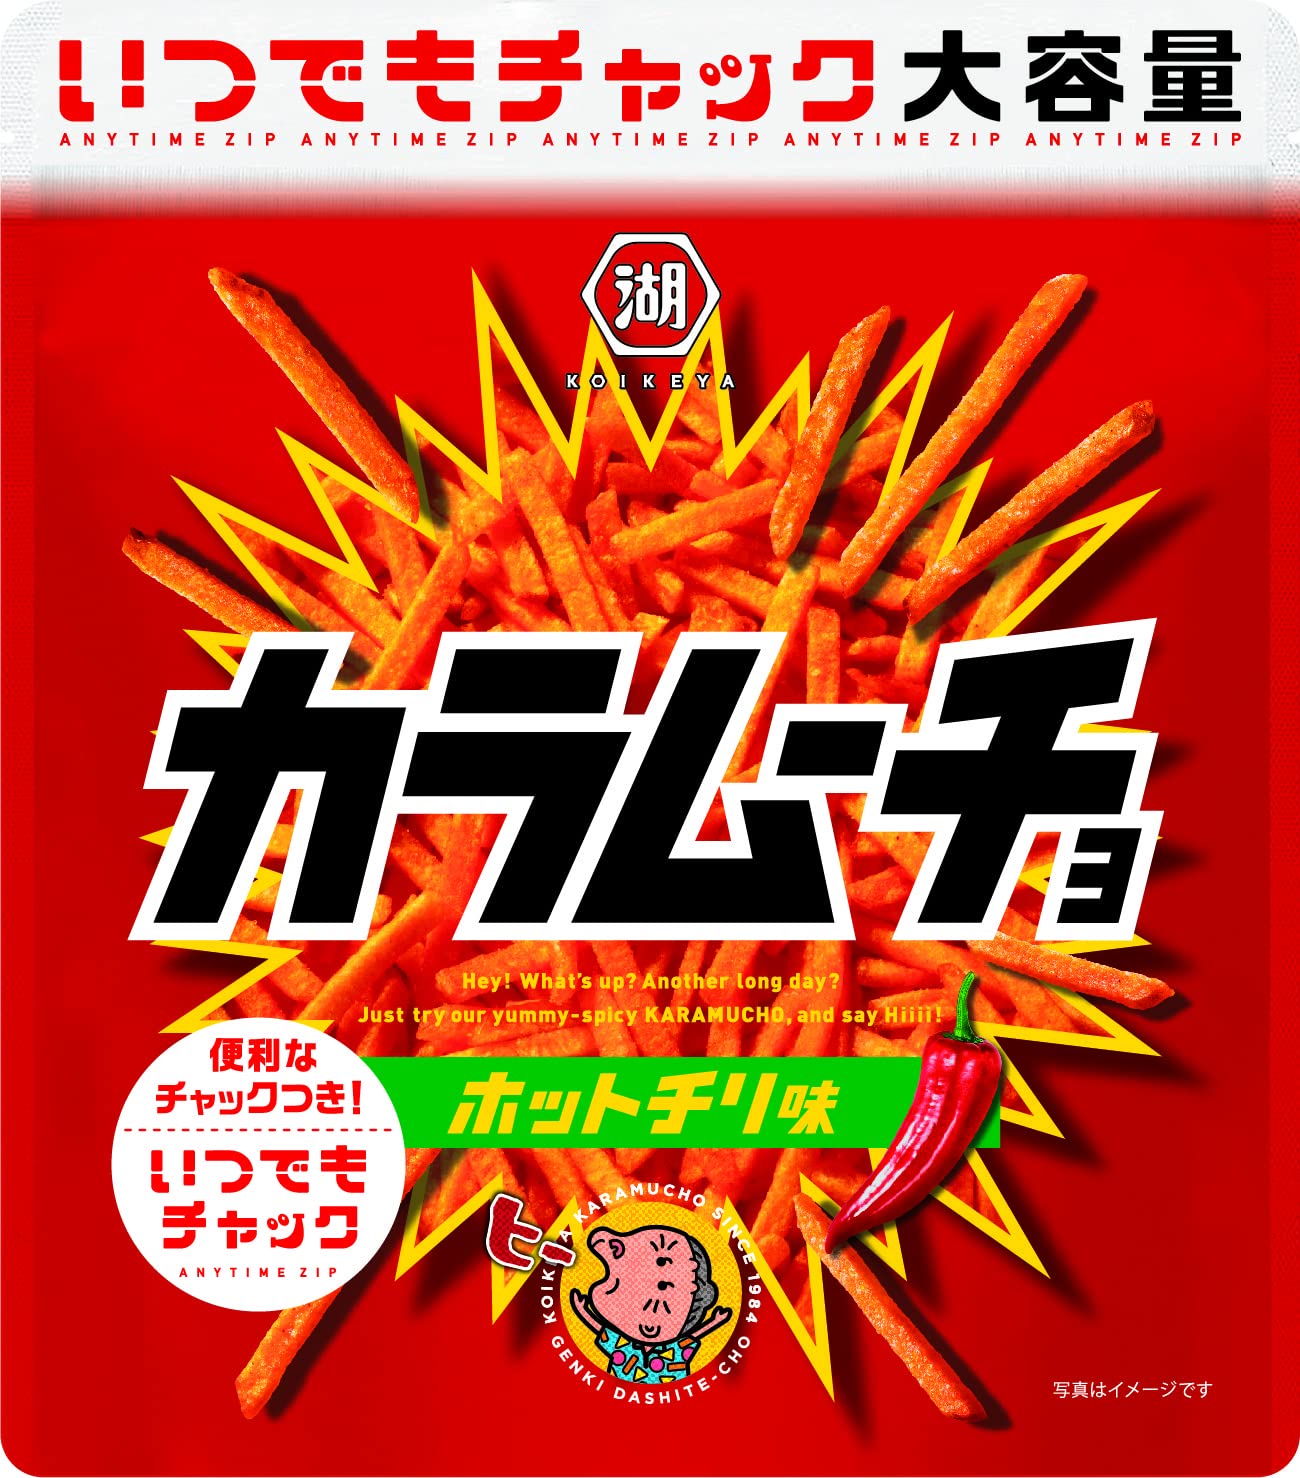 Flavor　Chuck　140G　Koikeya　Chili　Hot　X　Japan　Bags　Stick　12